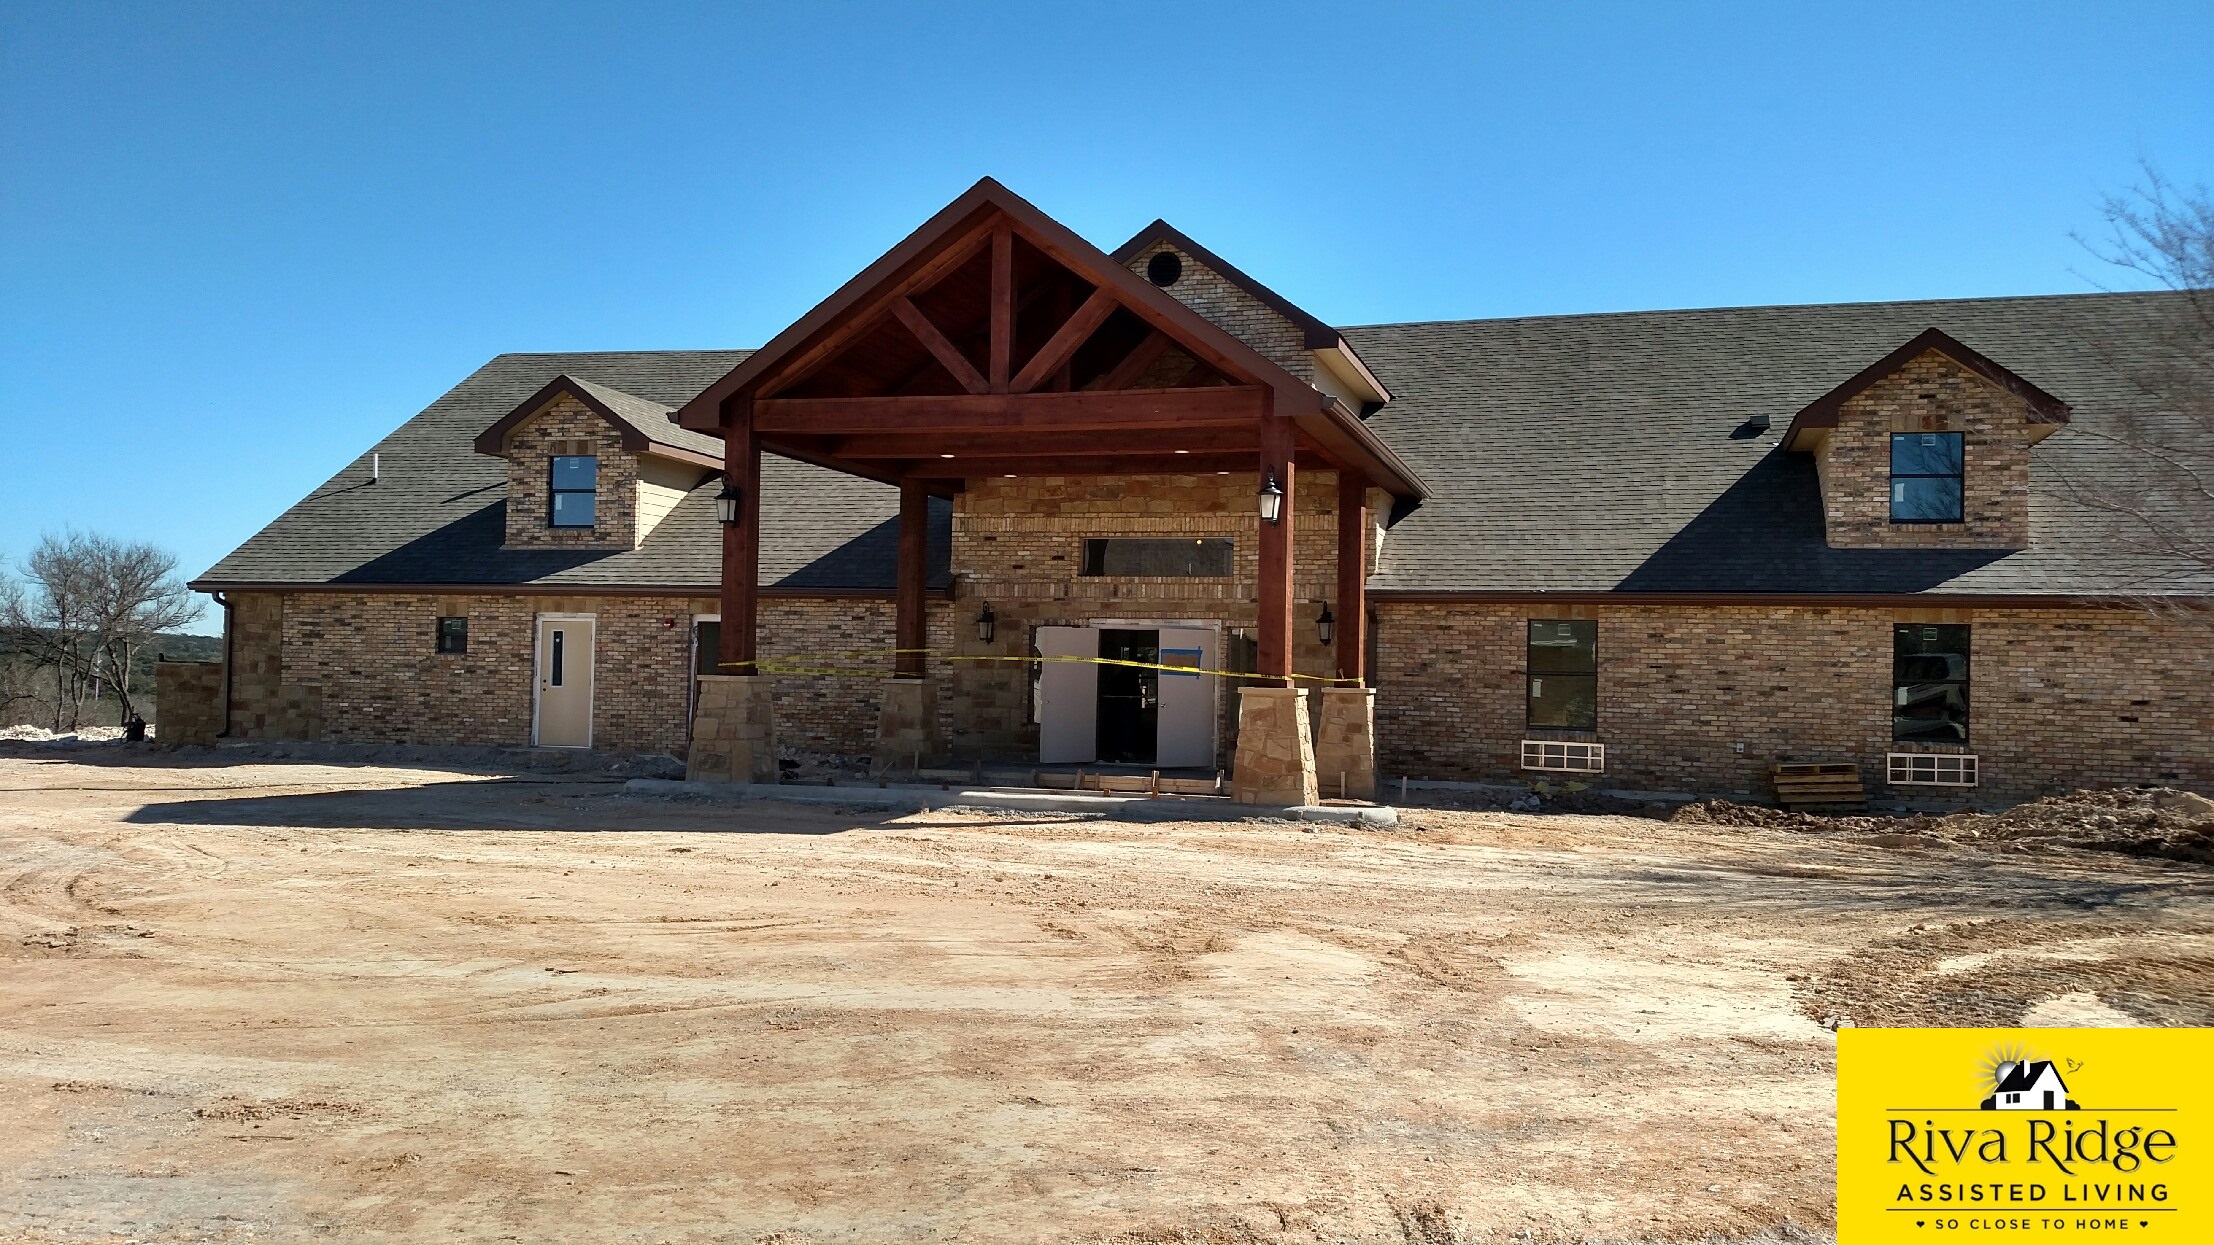 Progress on Riva Ridge Assisted Living in Leander, Texas